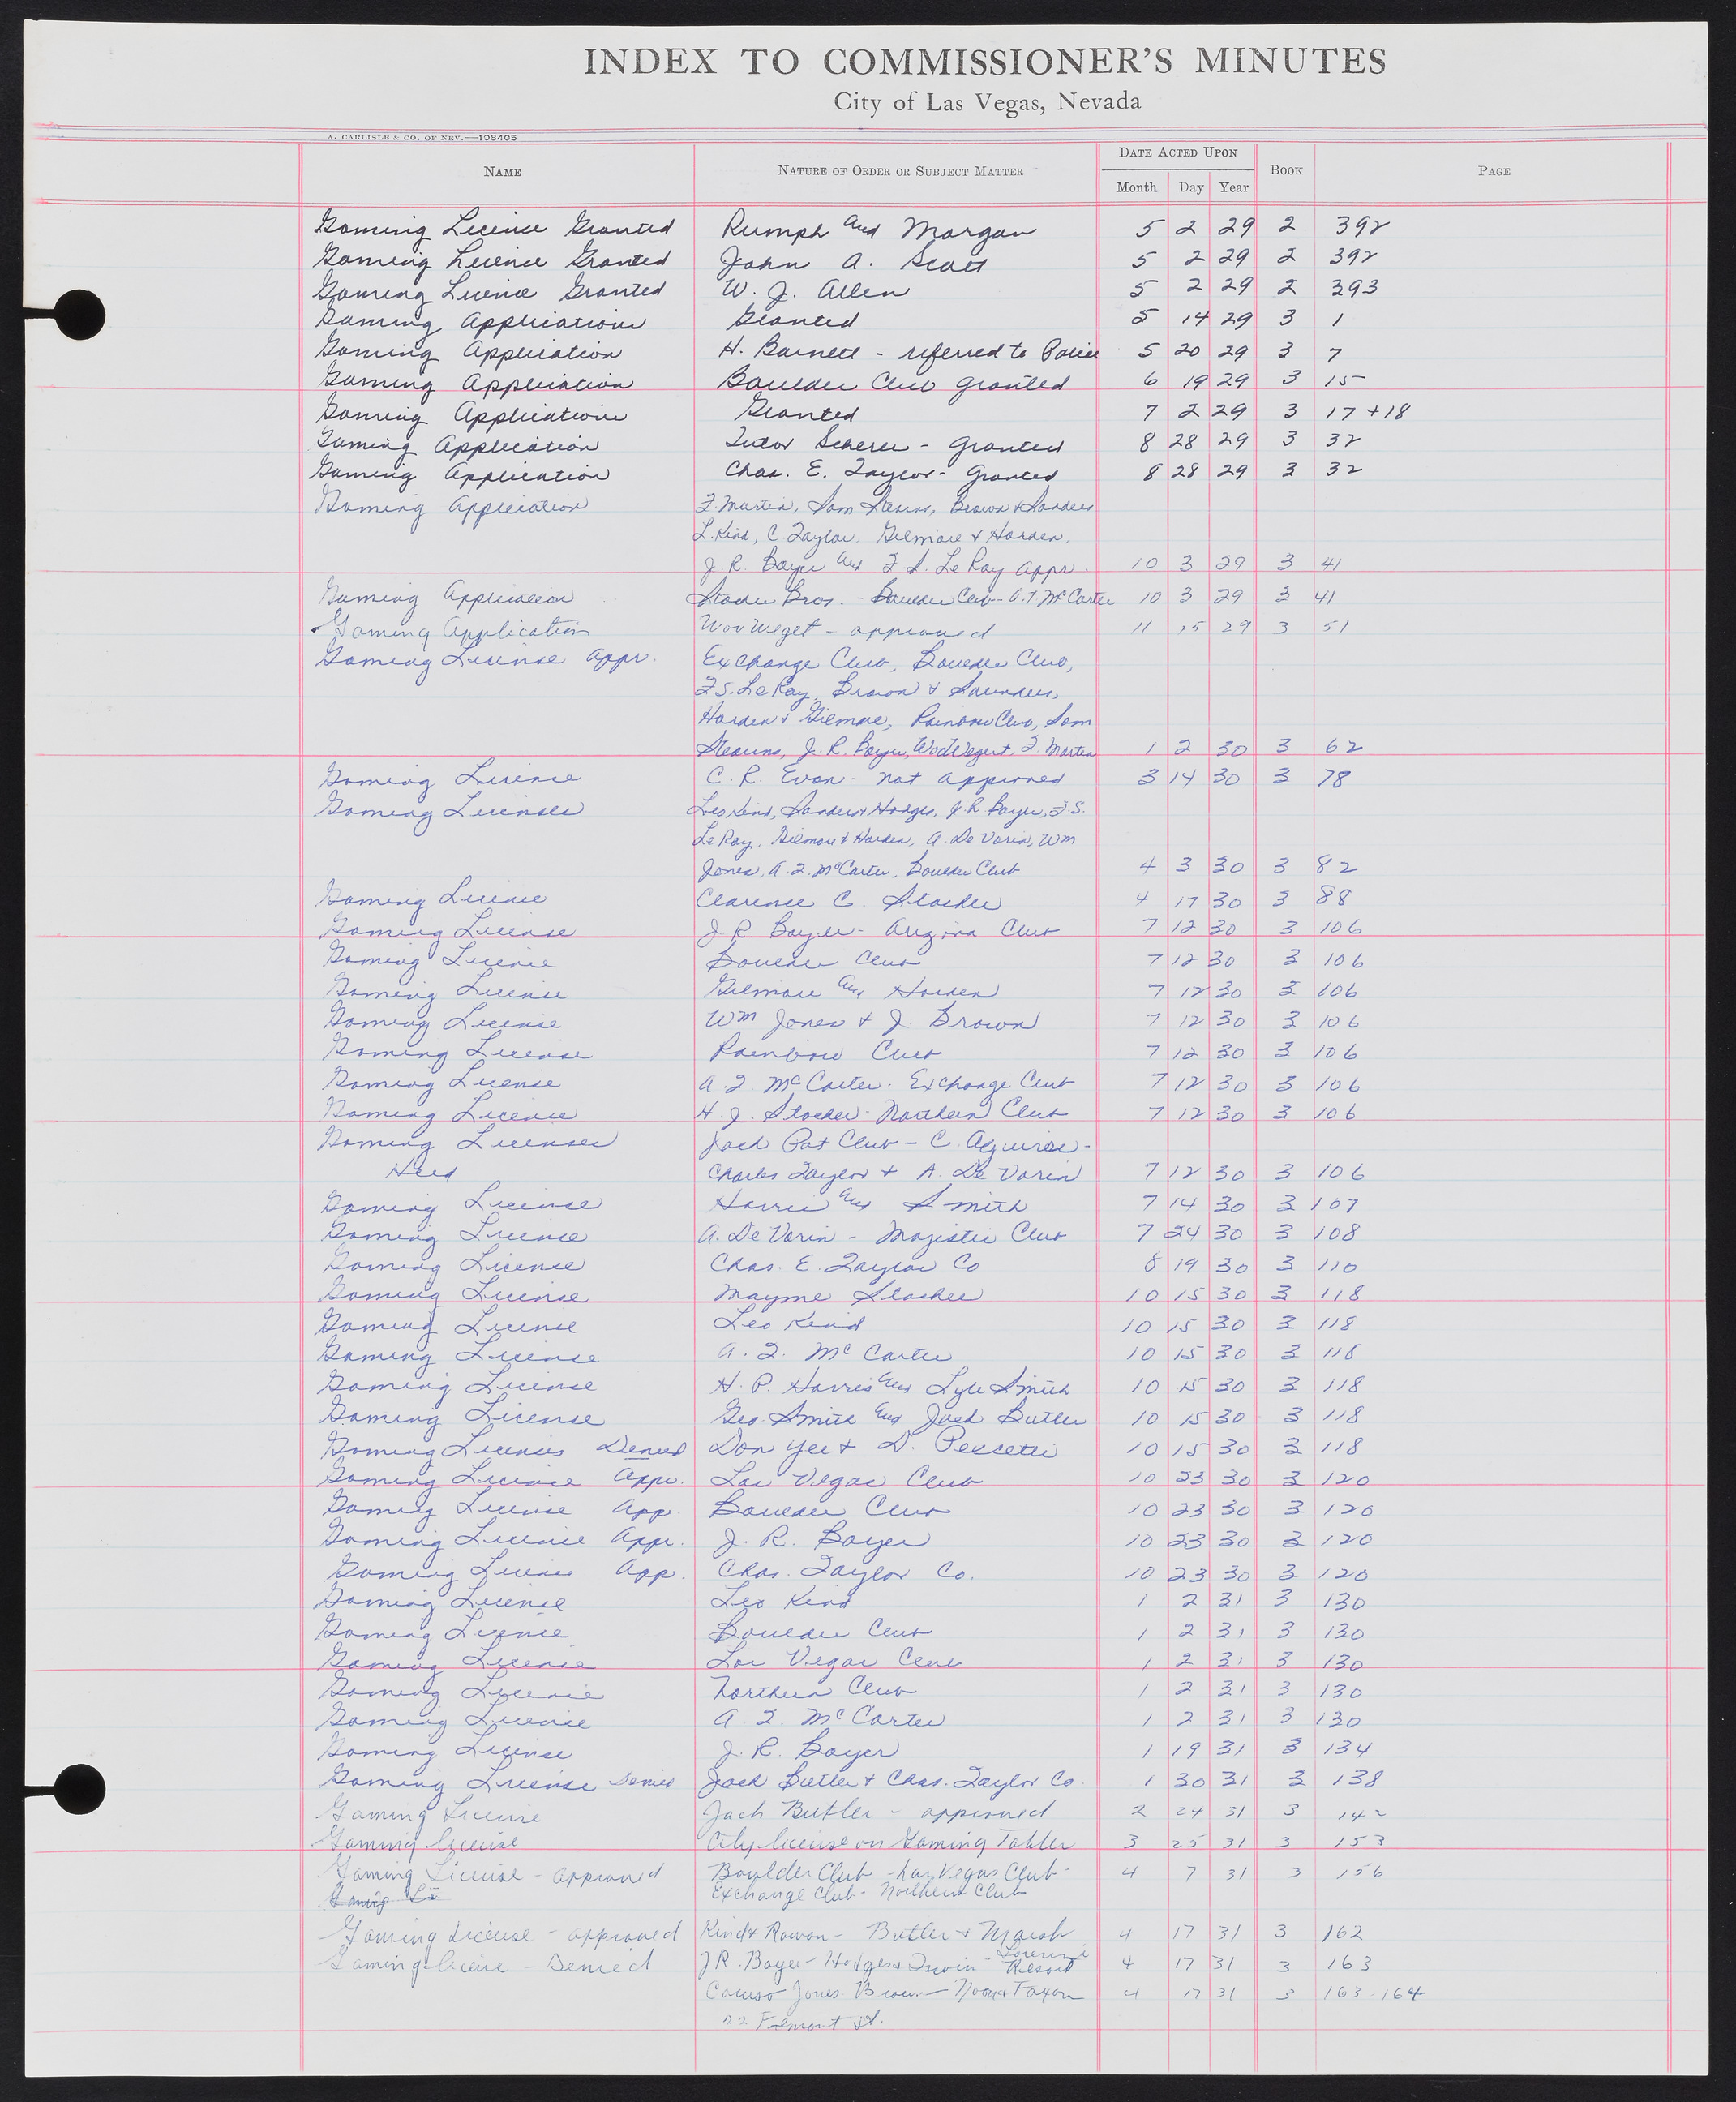 Las Vegas City Commission Minutes Index 1, 1911-1960: documents, item 152